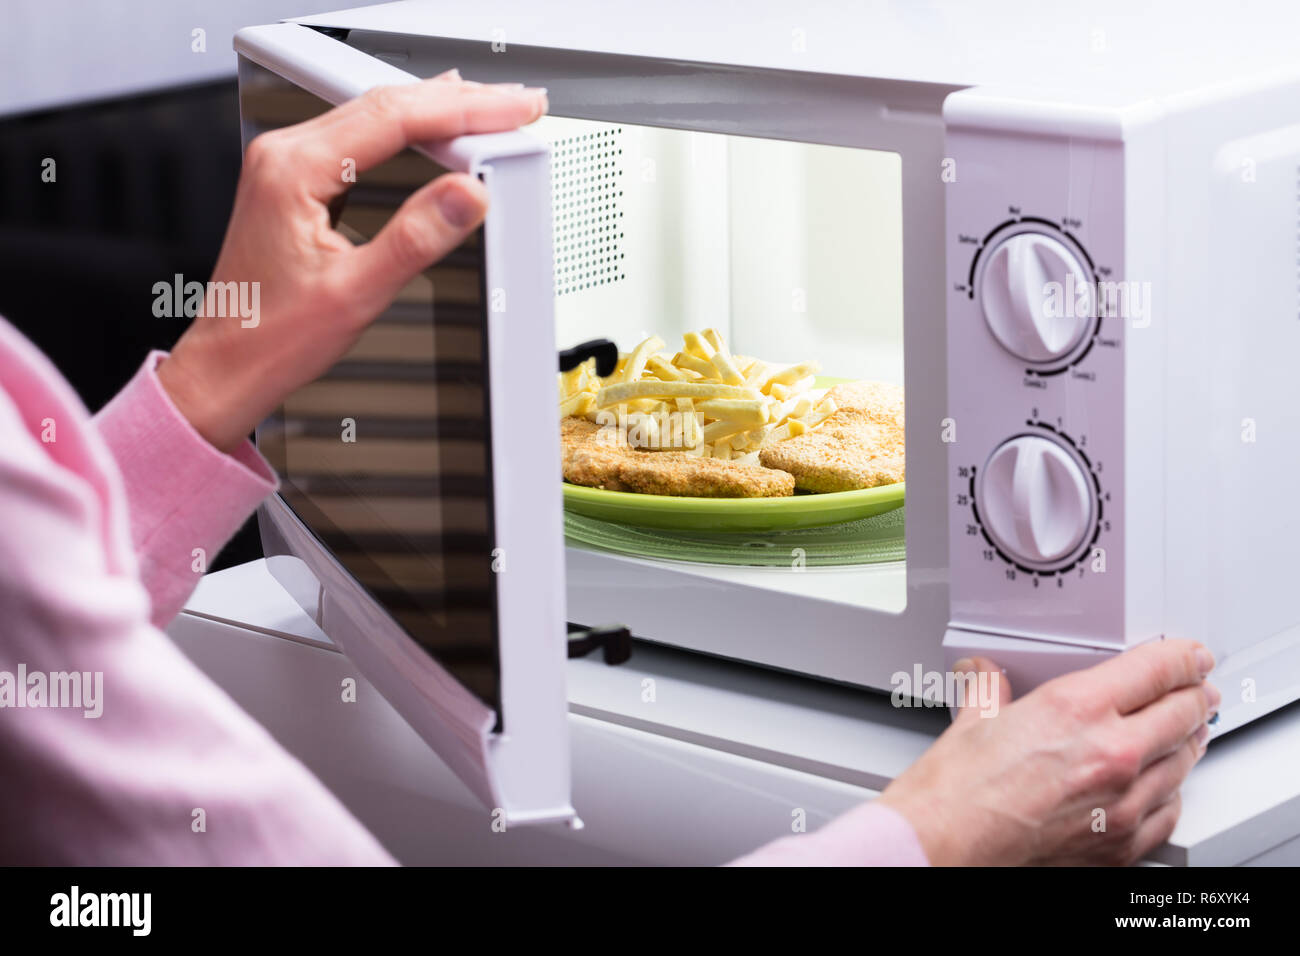 https://c8.alamy.com/comp/R6XYK4/woman-heating-food-in-microwave-R6XYK4.jpg